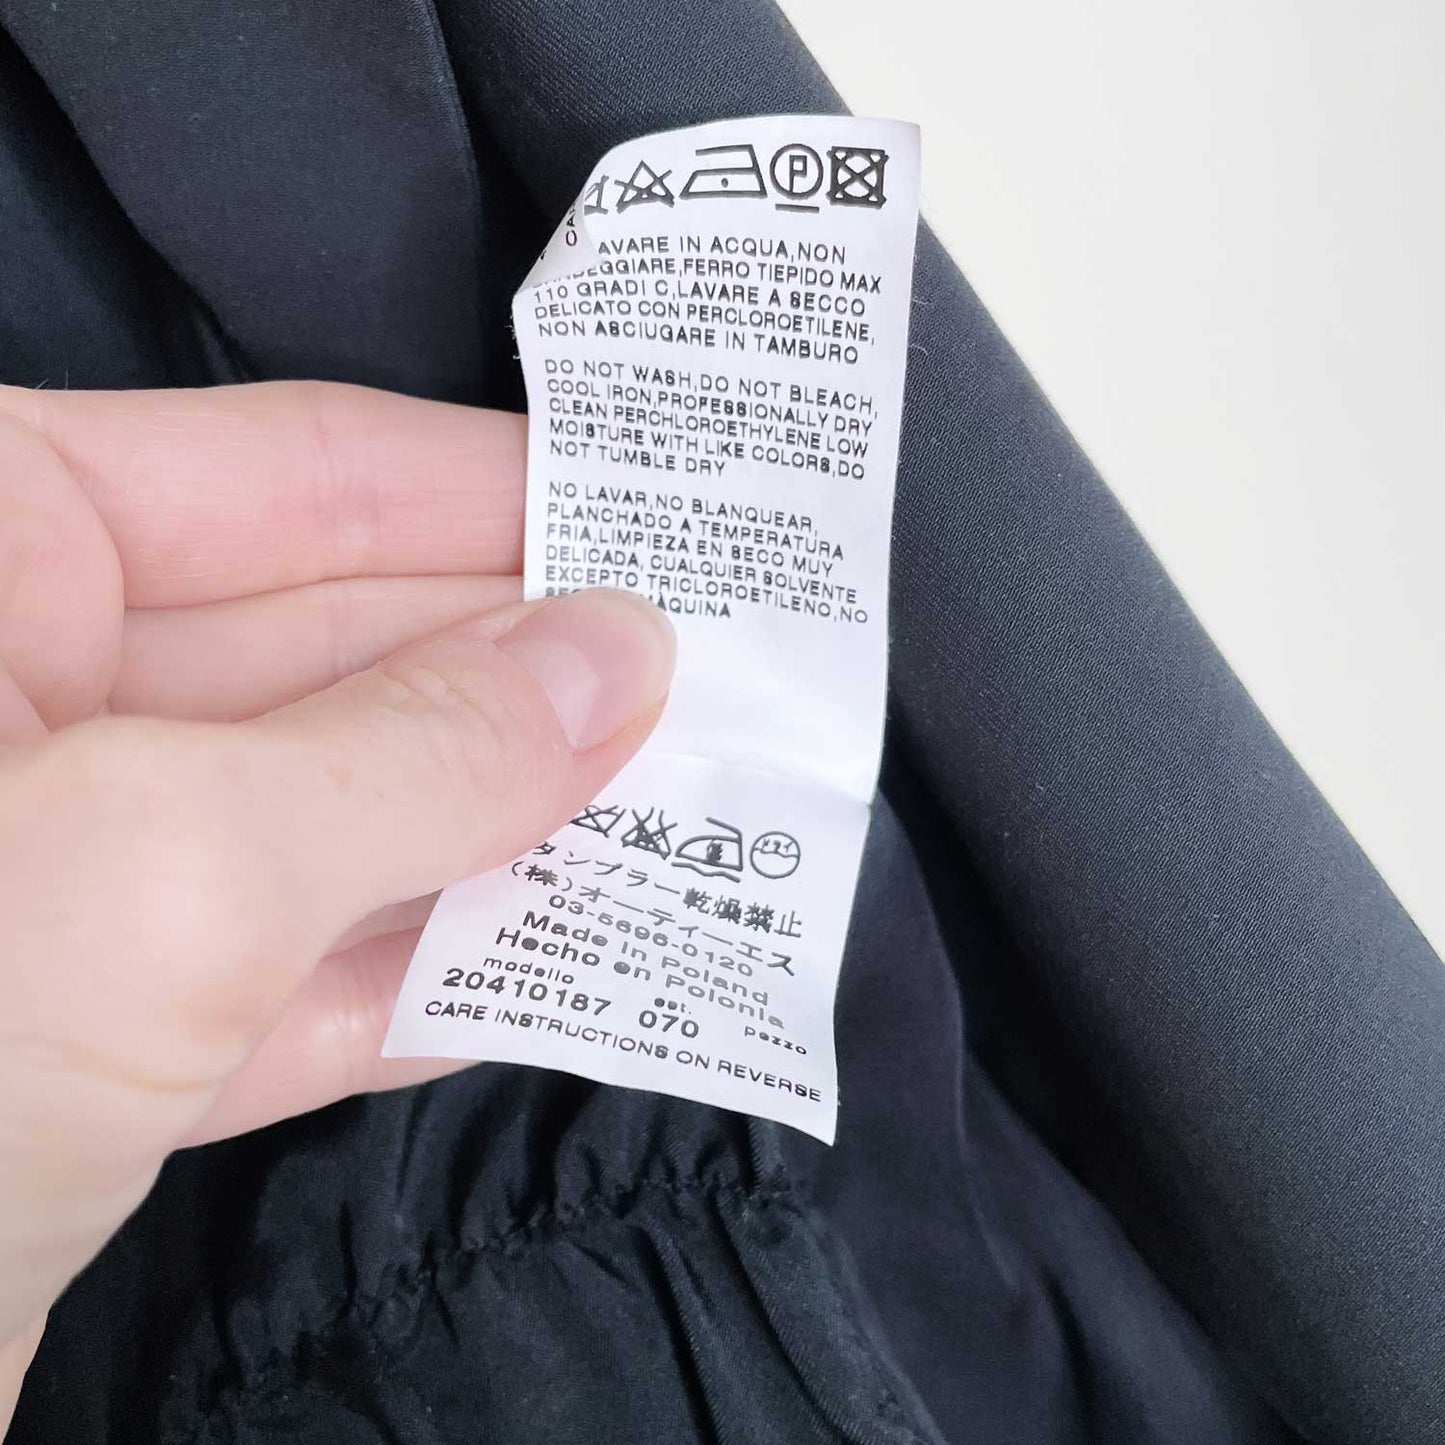 sportmax single button blazer with chiffon layer - size 8